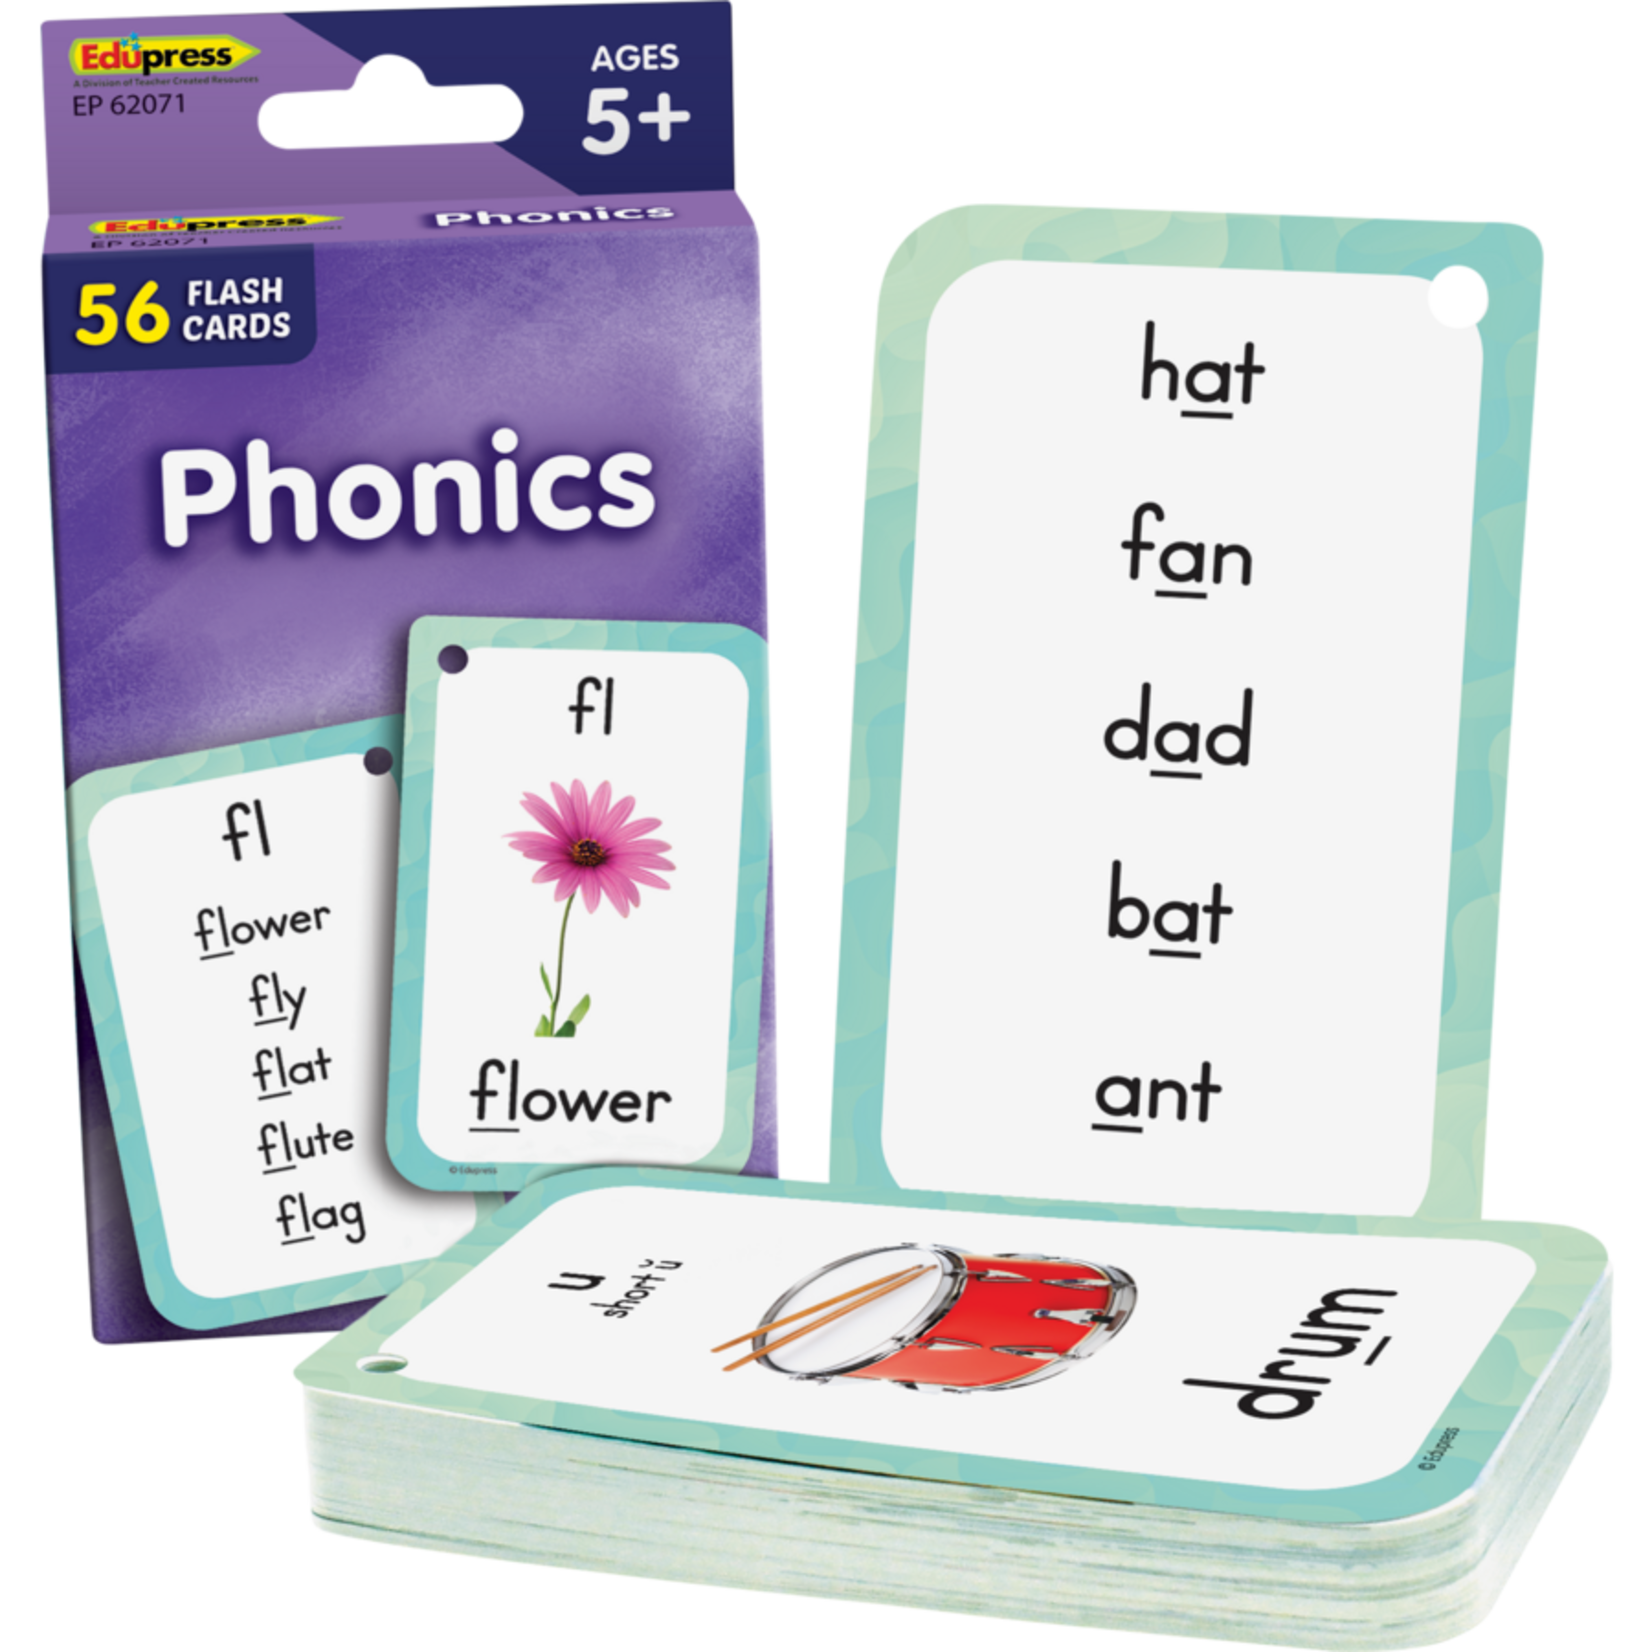 TEACHER CREATED RESOURCES Phonics Flash Cards